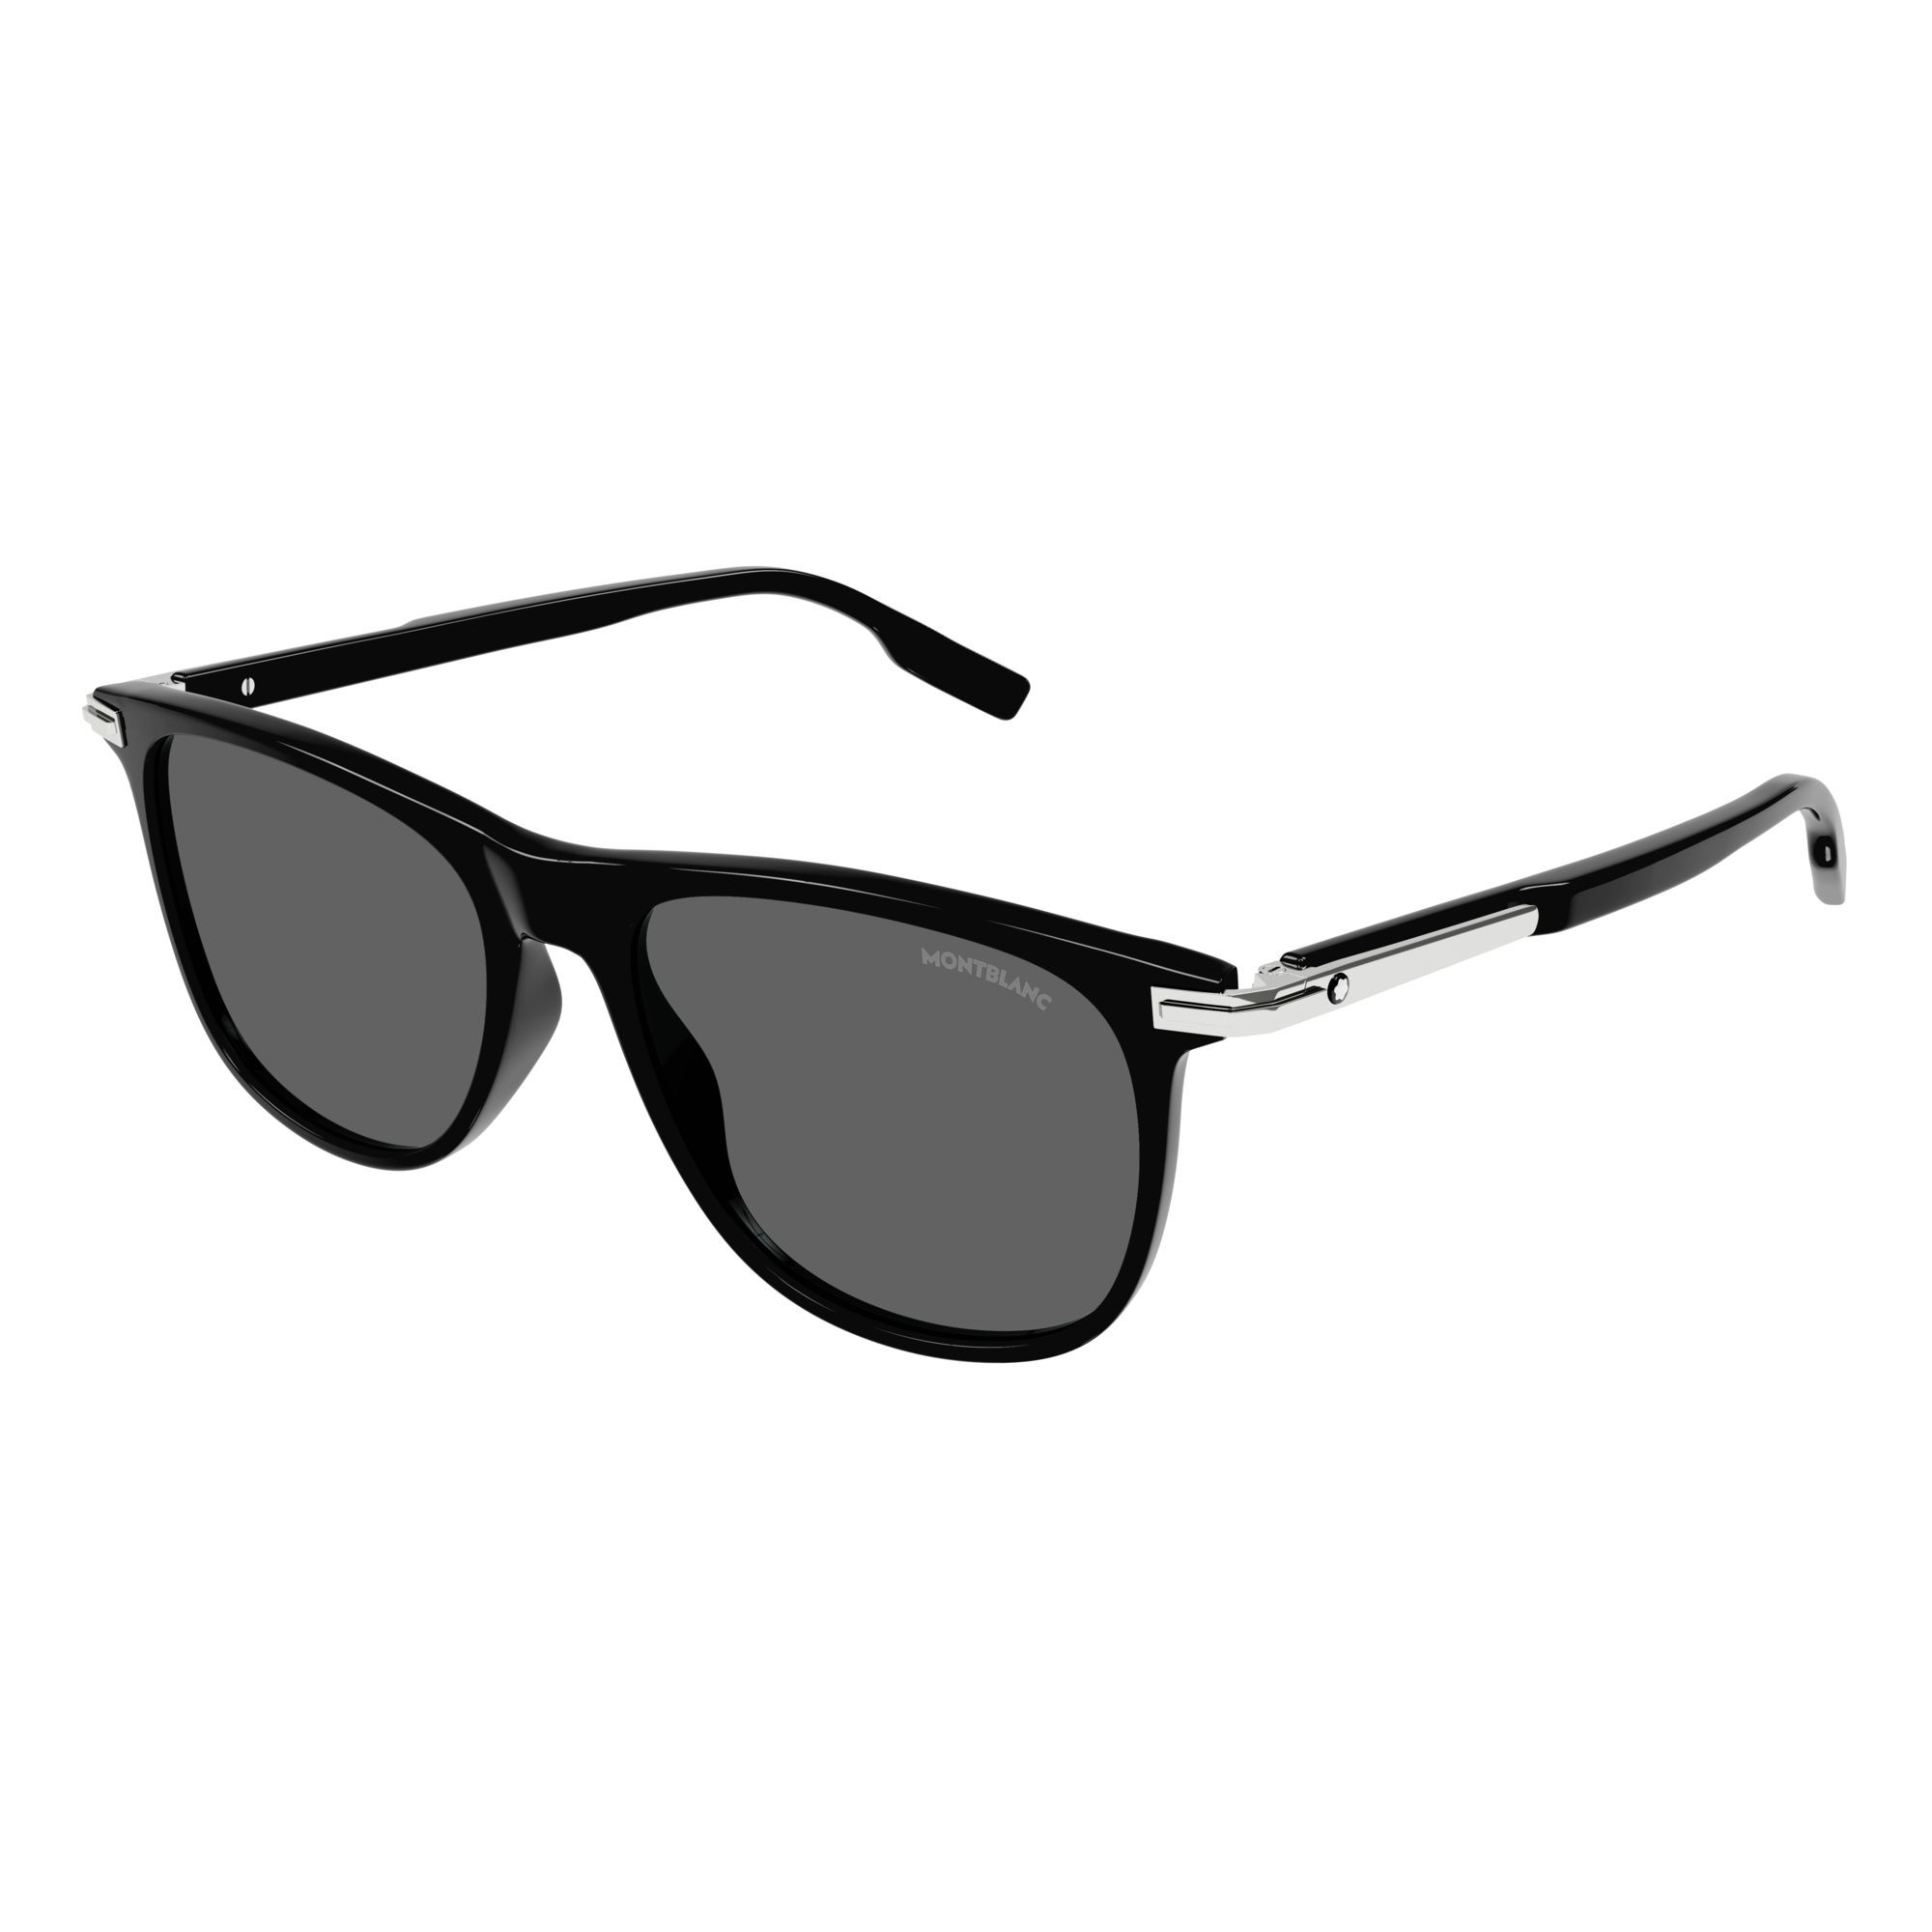 MB0216S Pillow Sunglasses 1 - size 56